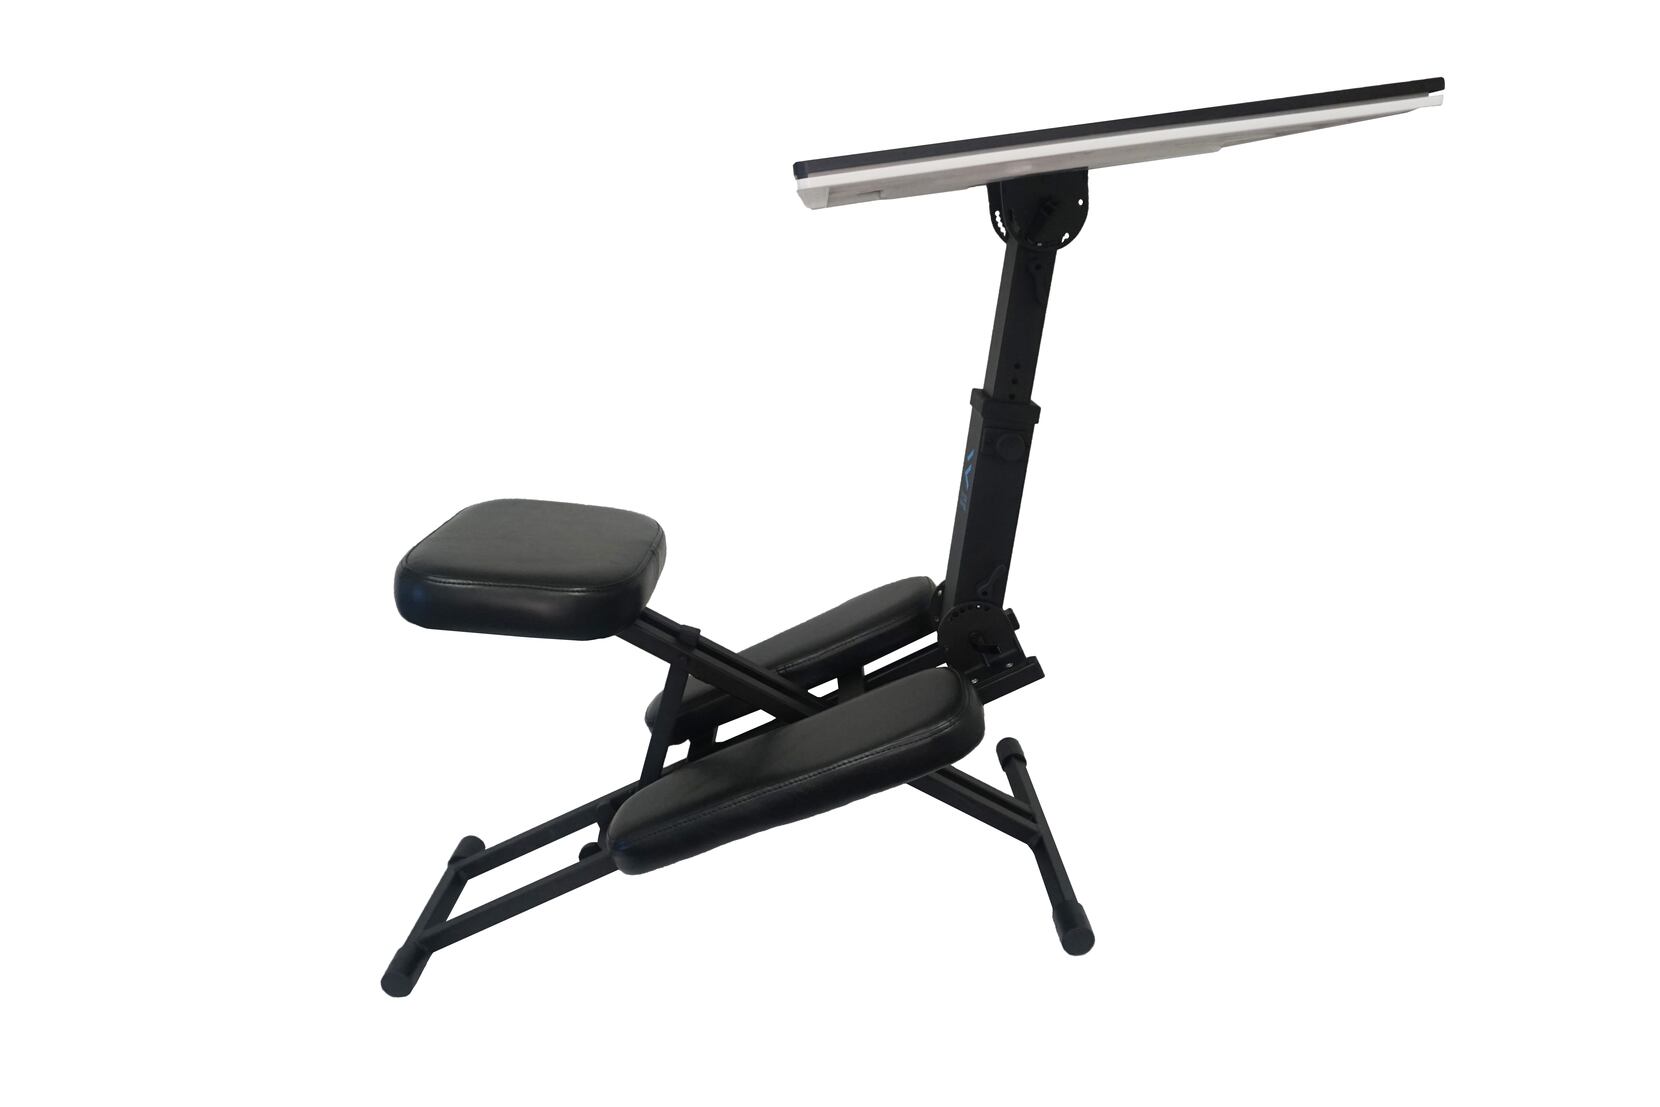 Portable Floor Desk & Bench: Ergonomic Comfort for Work & Study